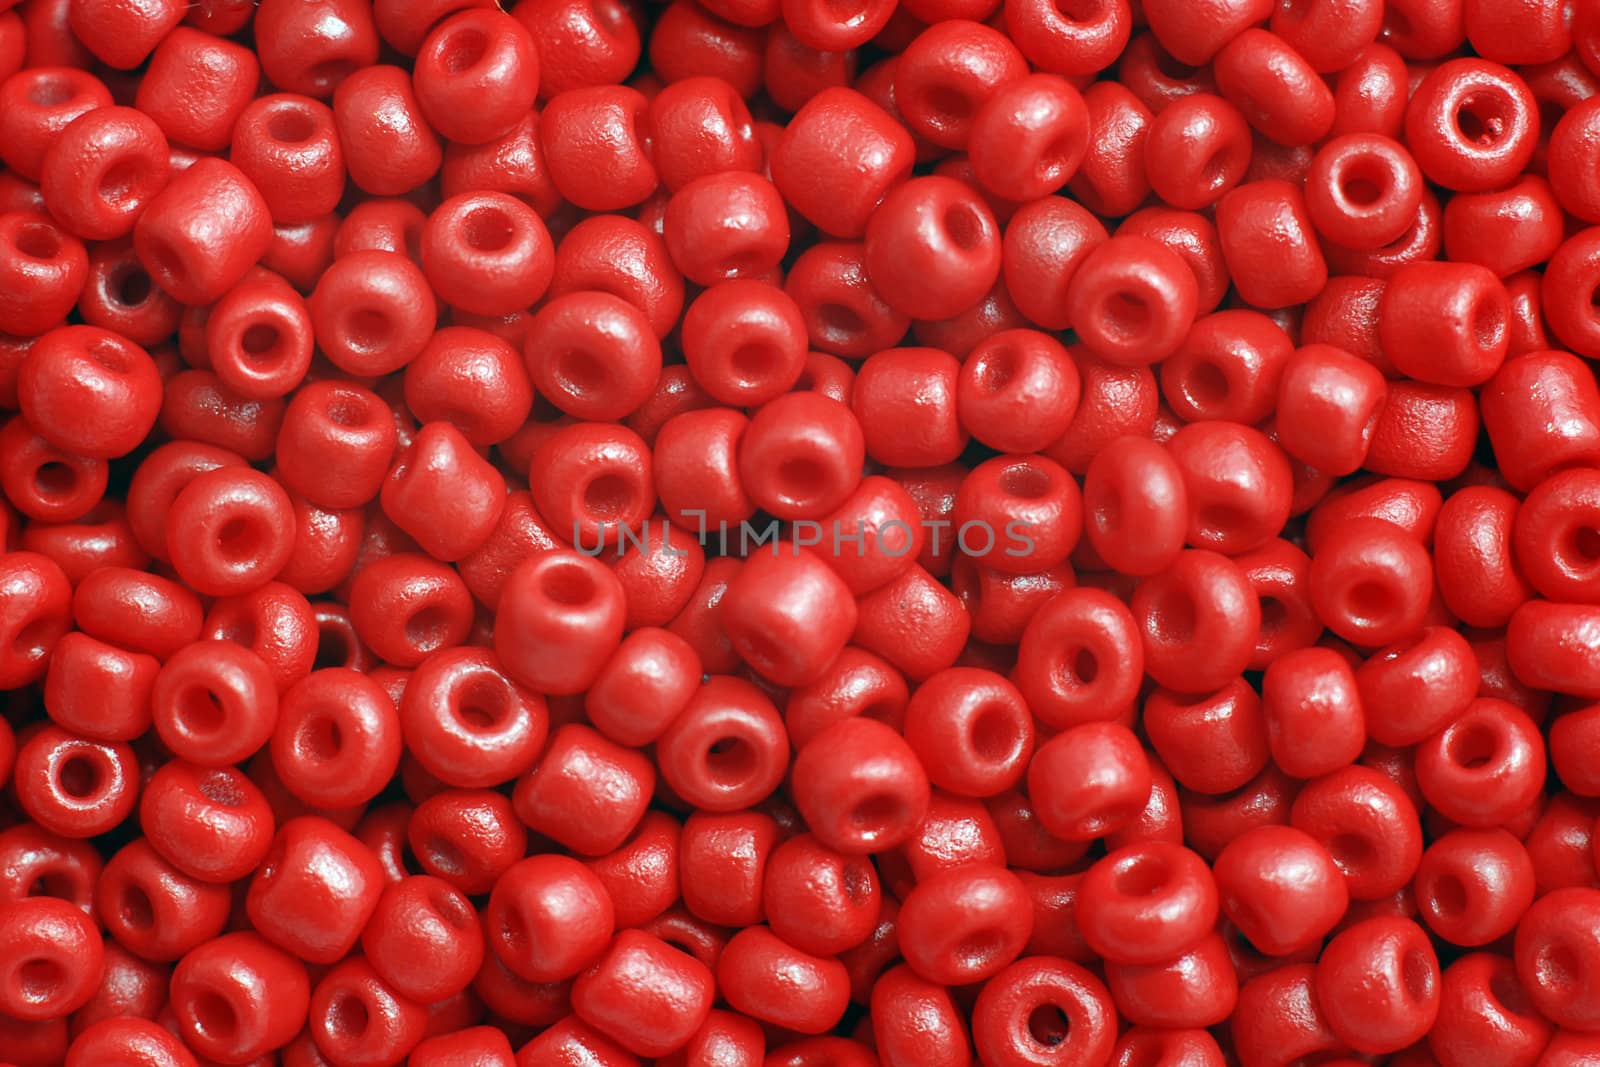 Red beads by Gjermund